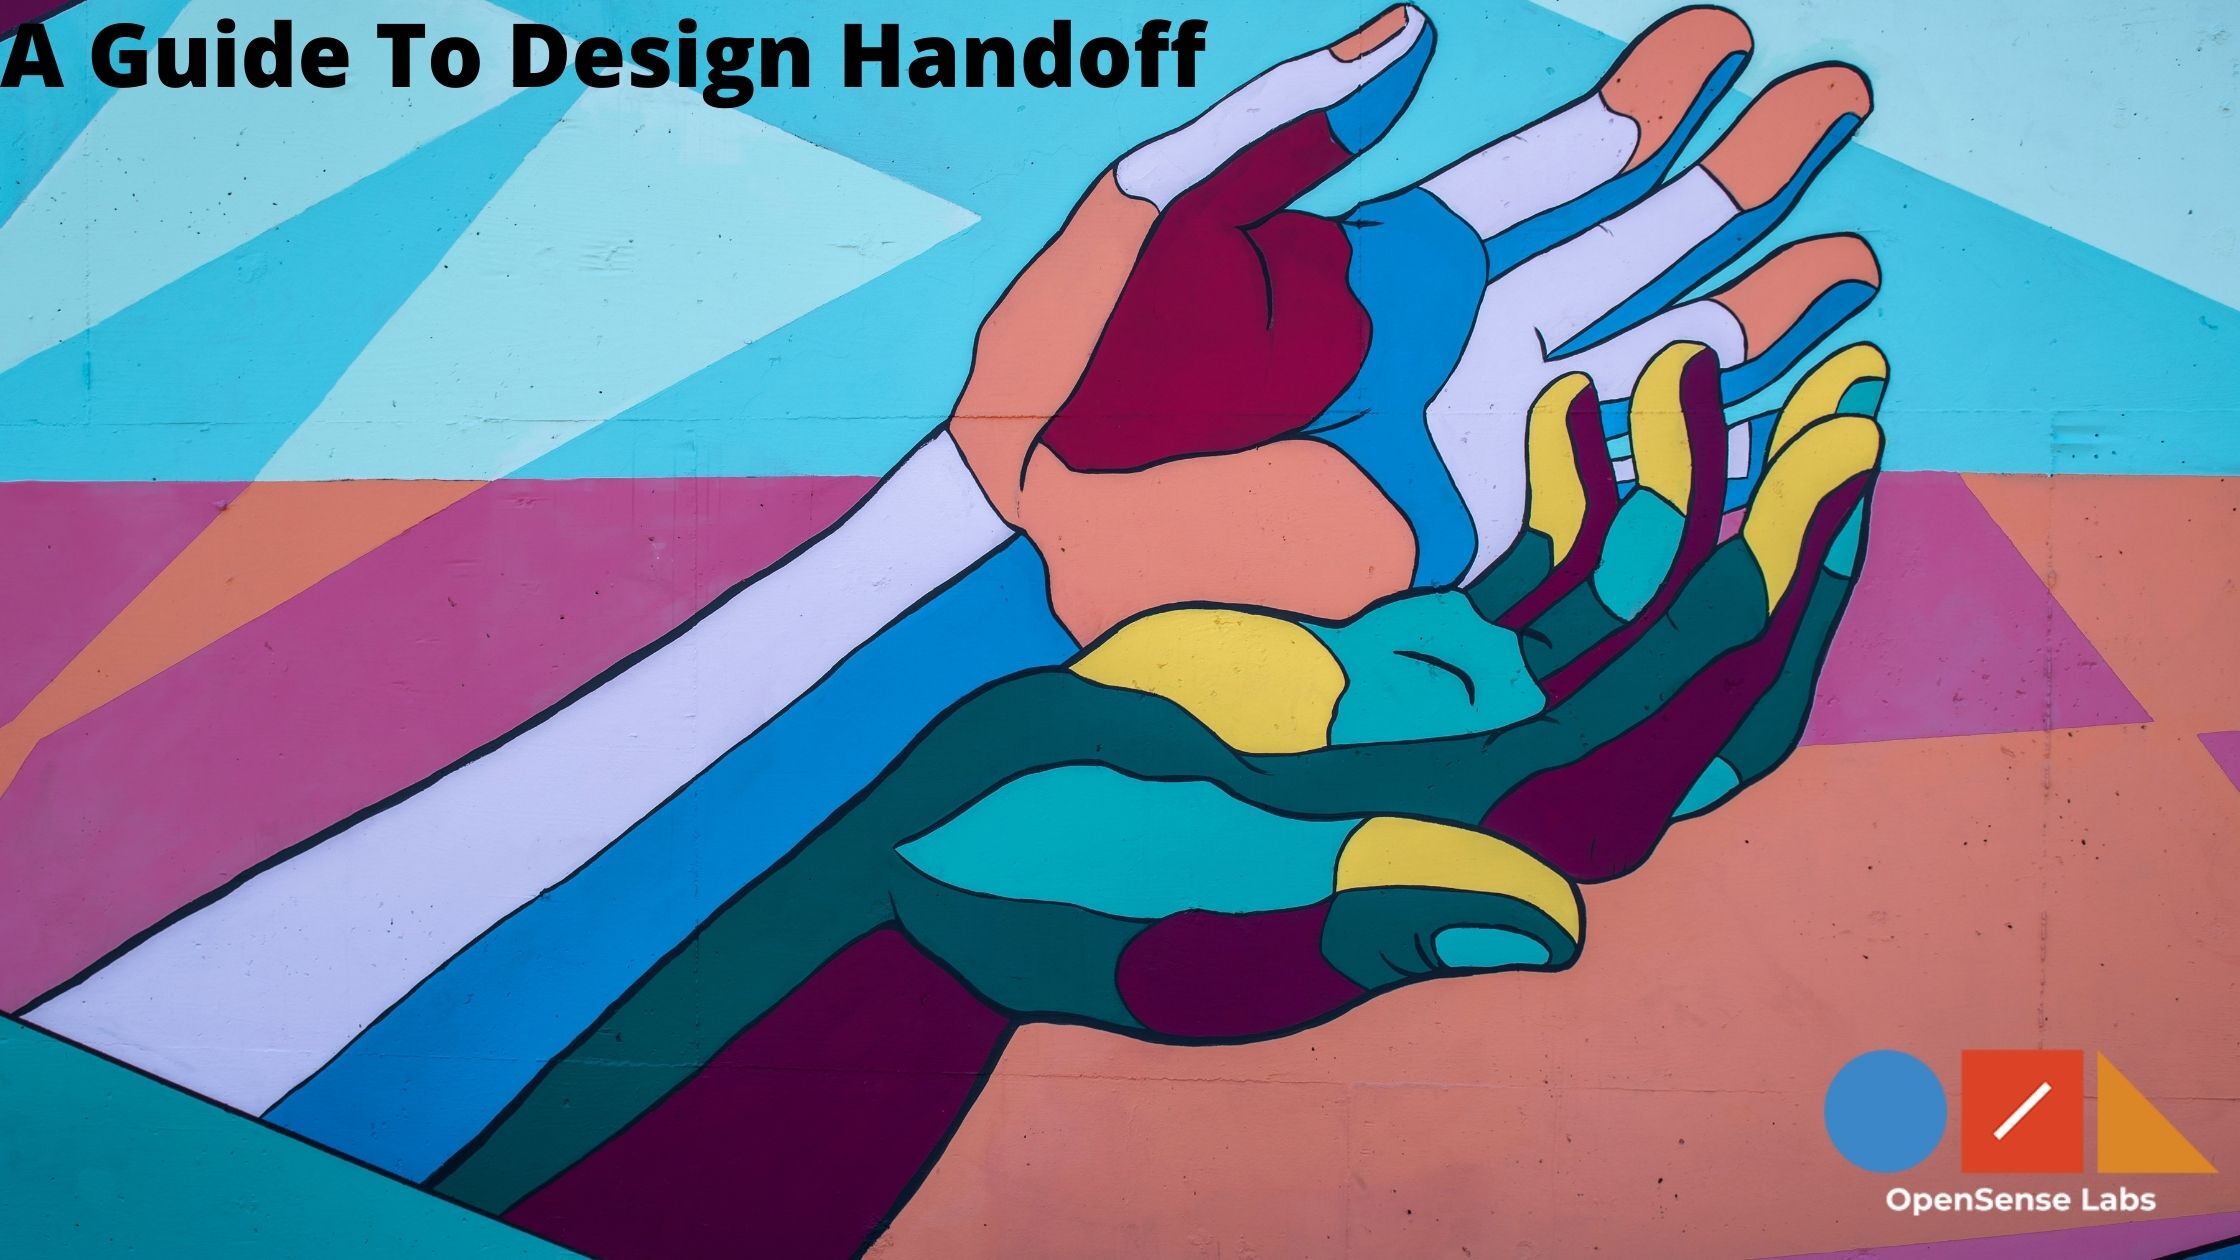 Illustration diagram describing a guide to design handoff